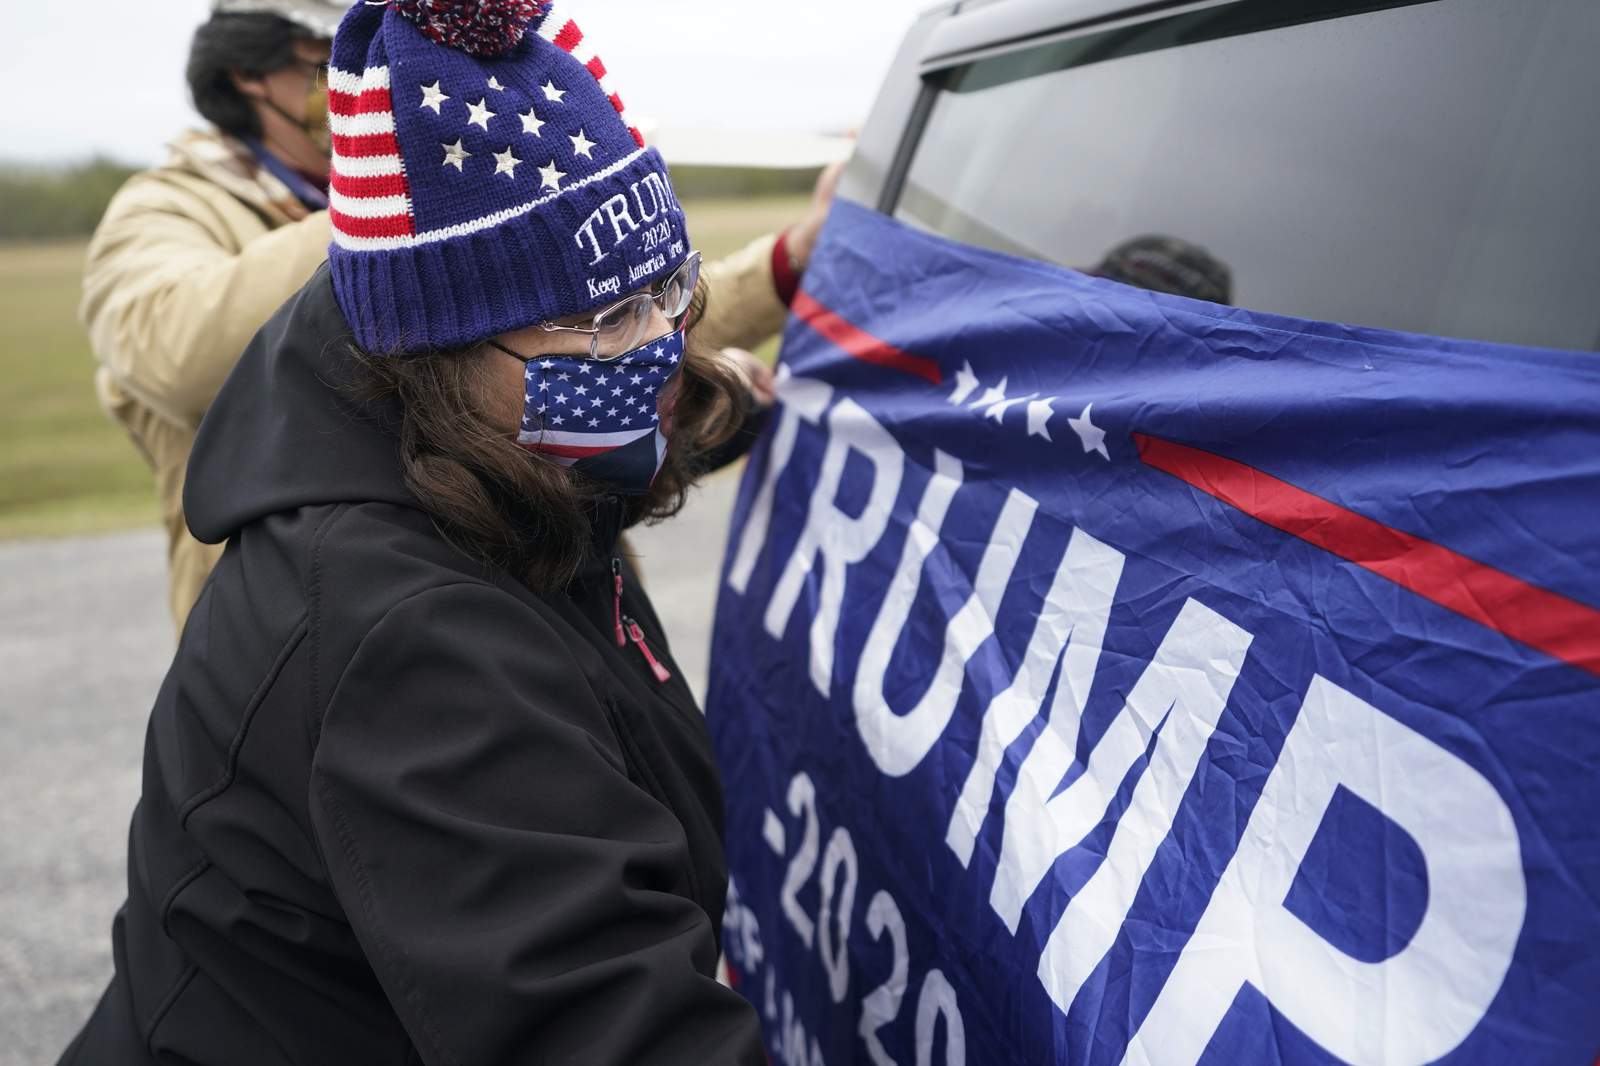 Social media captures President Donald Trump’s visit to the Texas border